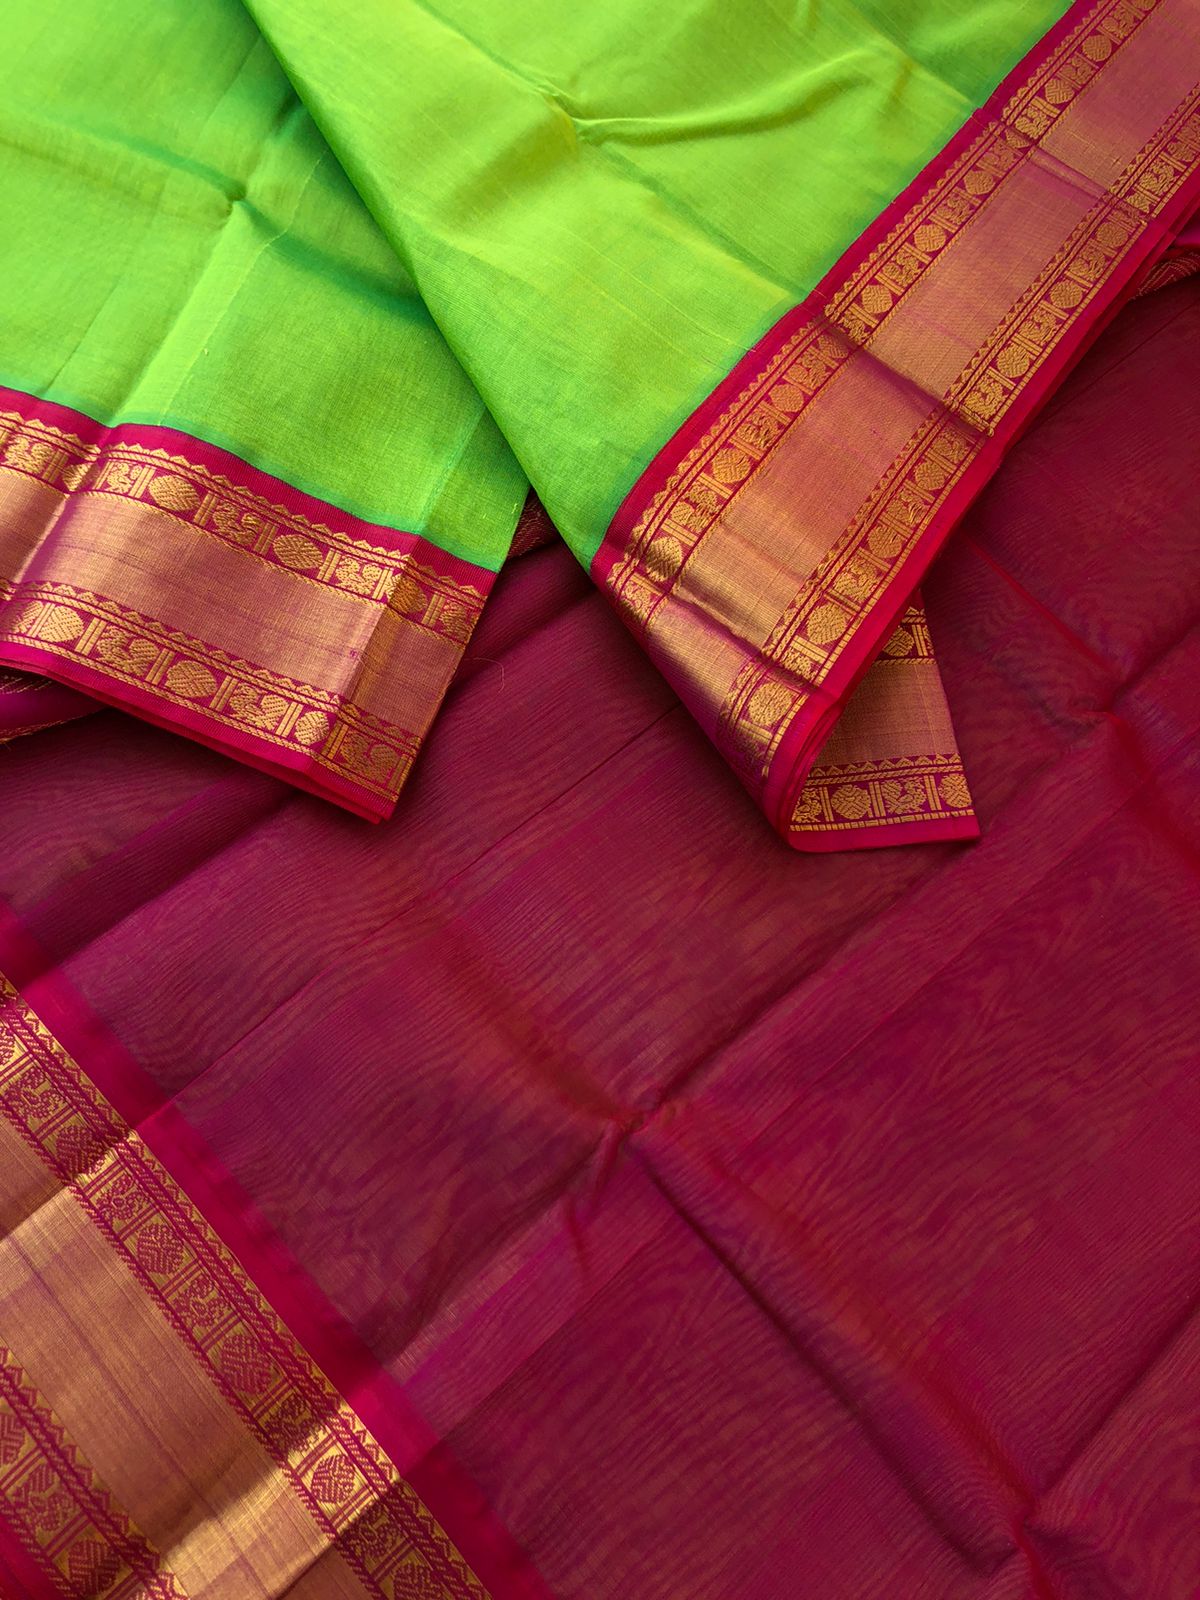 Korvai Silk Cottons Woven Silk Borders - parrot green and kum kum pink